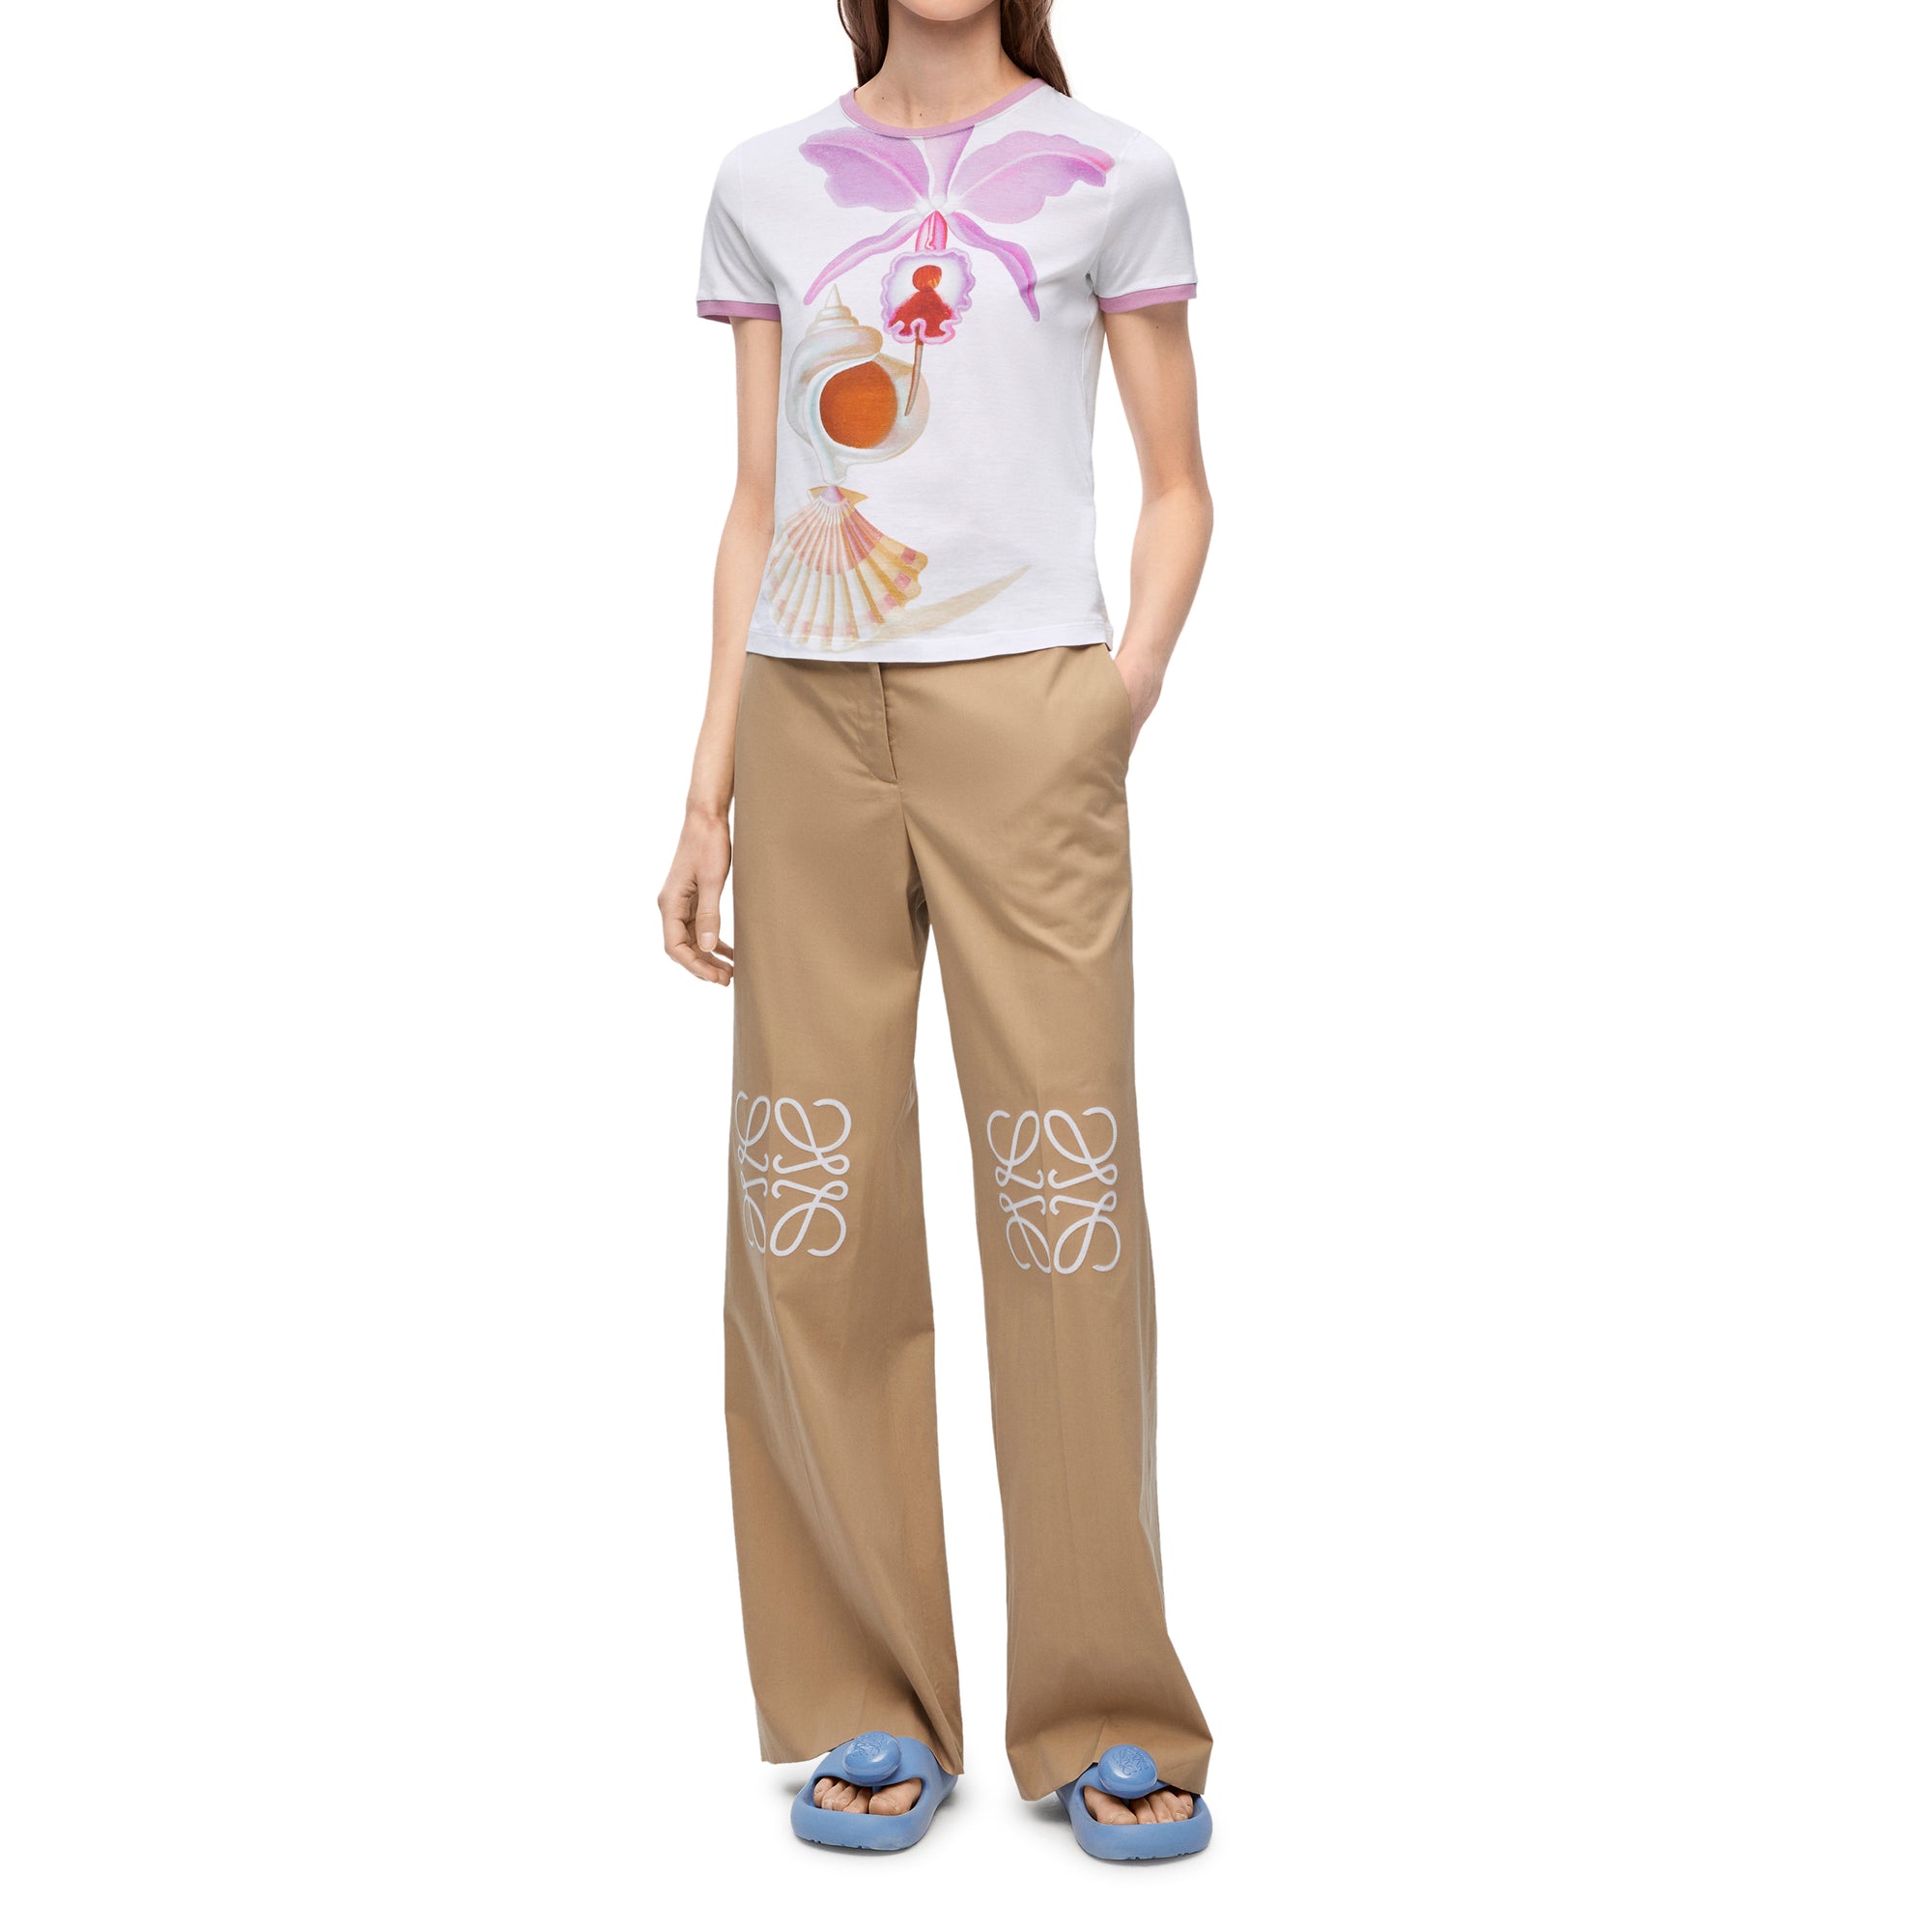 Loewe - Women’s Slim Fit T-Shirt - (White/Multicolour) view 2